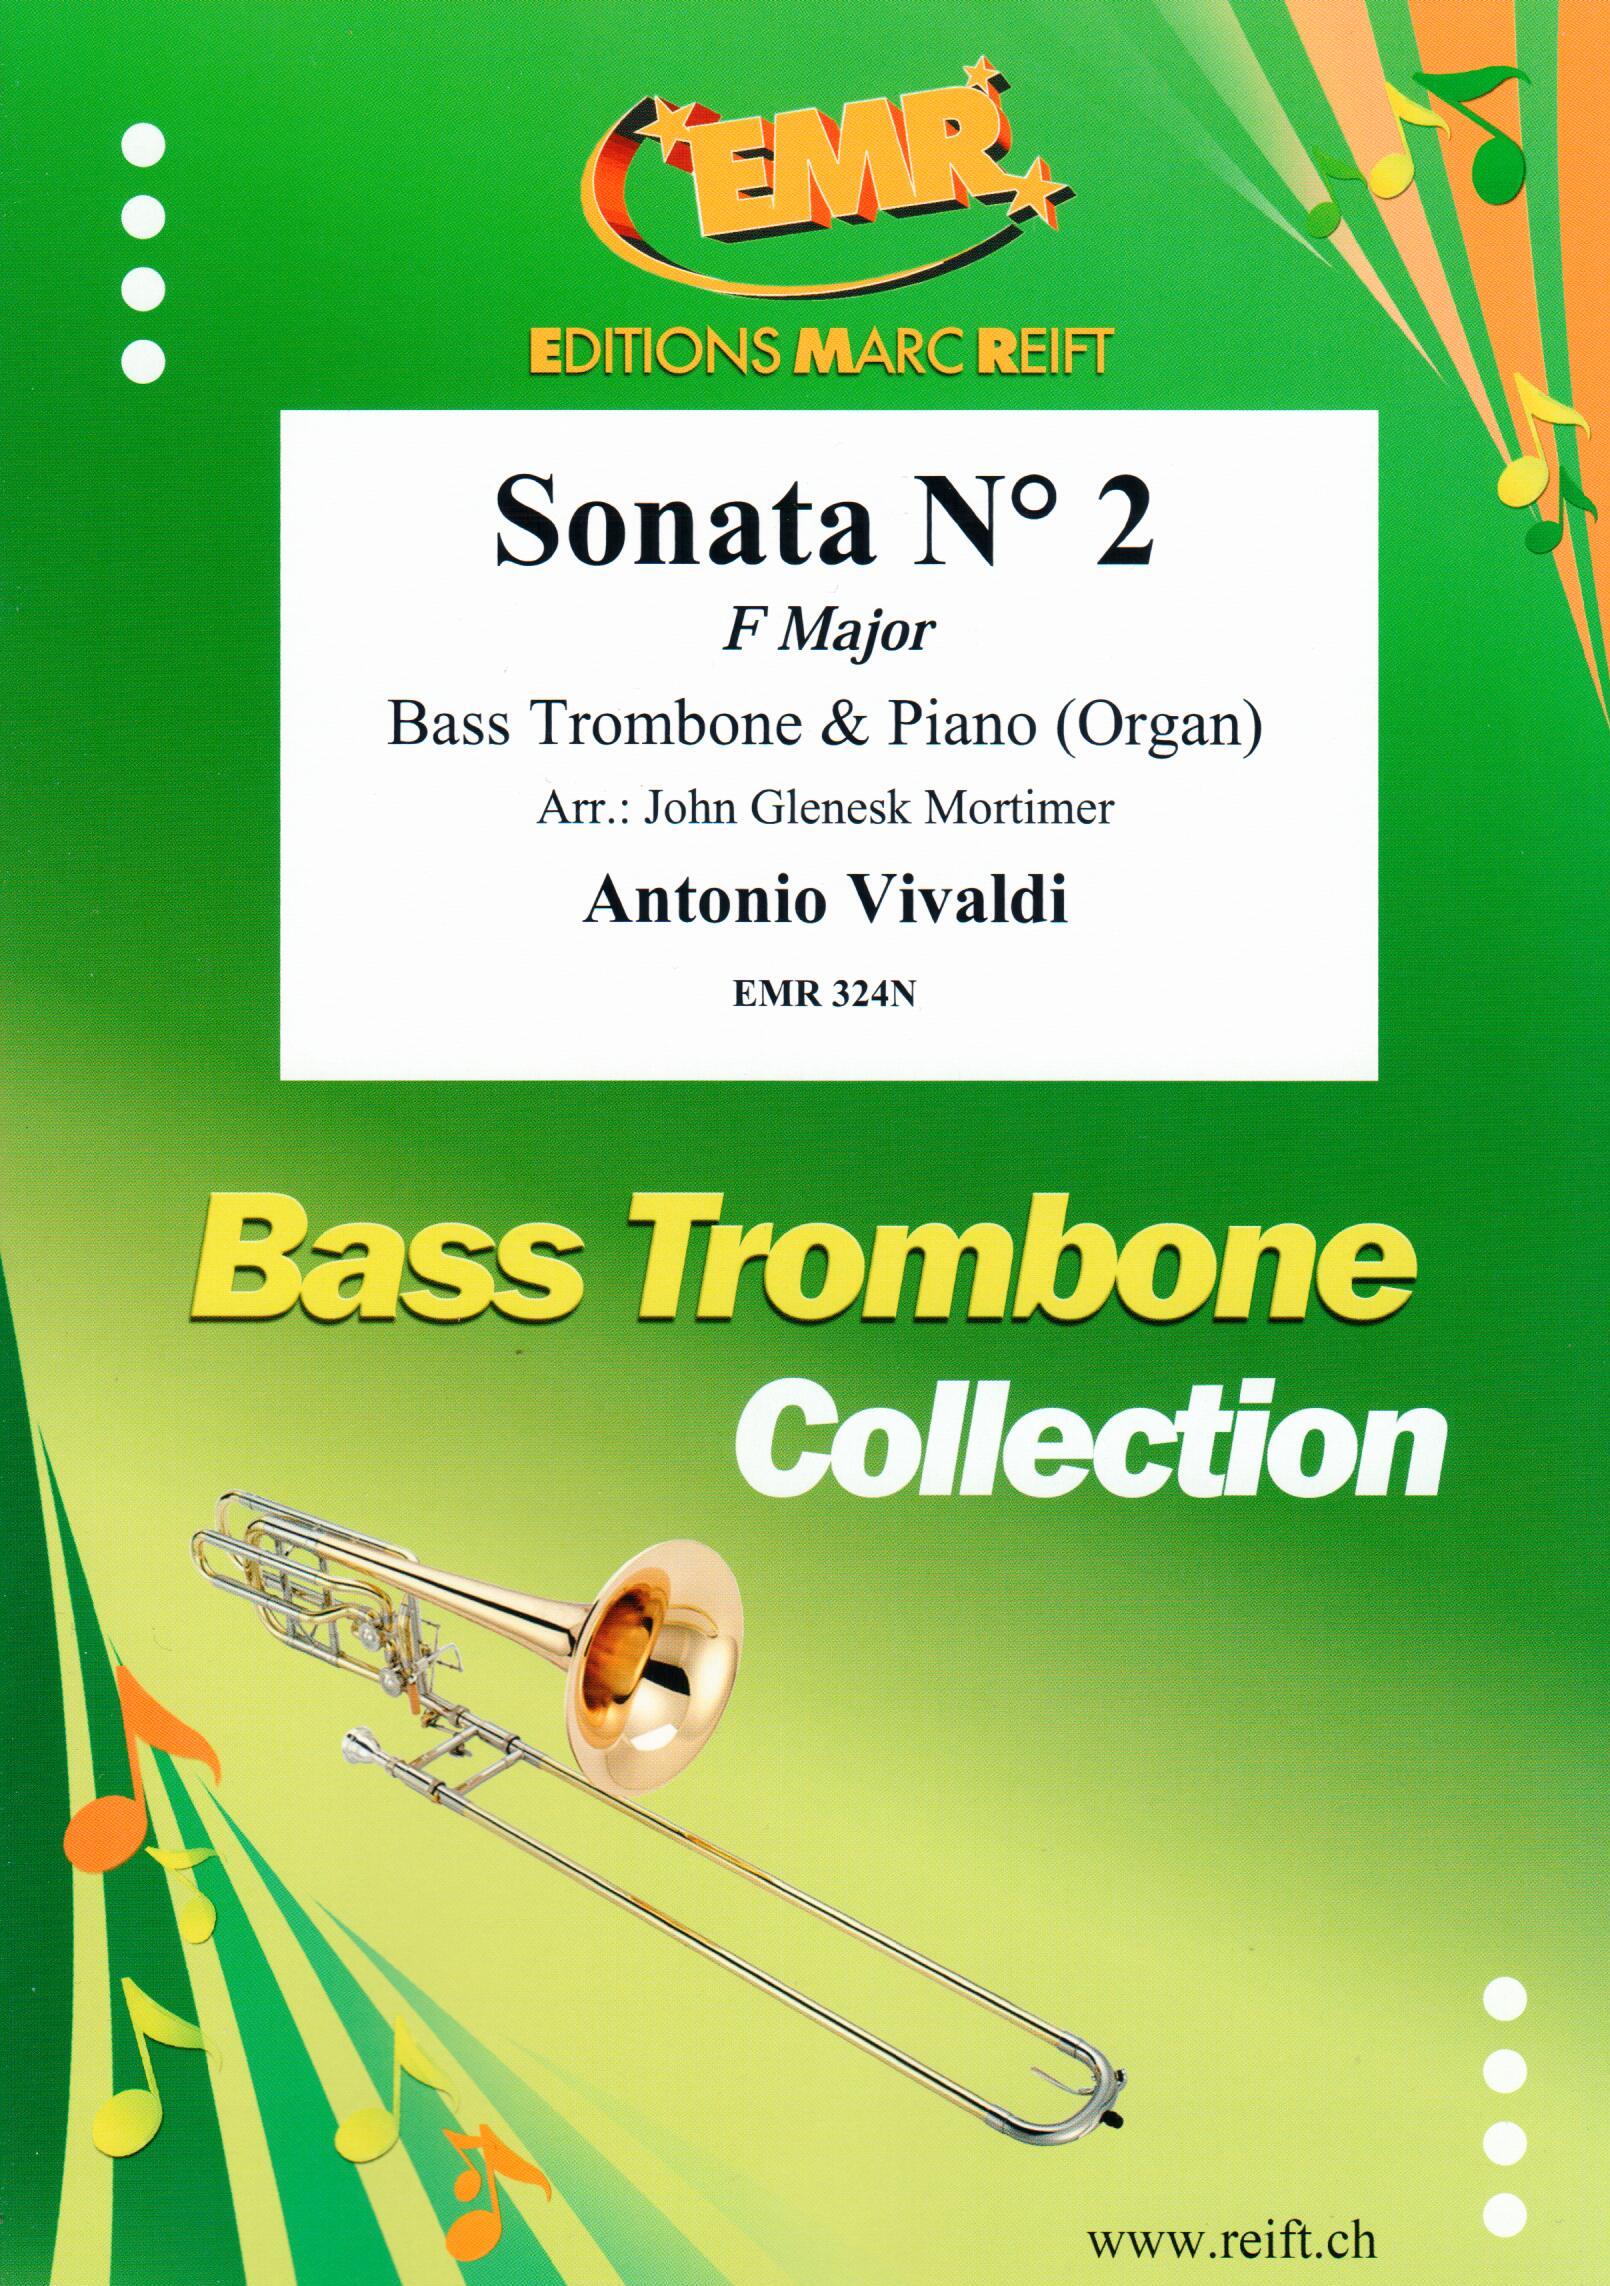 SONATA N° 2 IN F MAJOR, EMR Bass Trombone